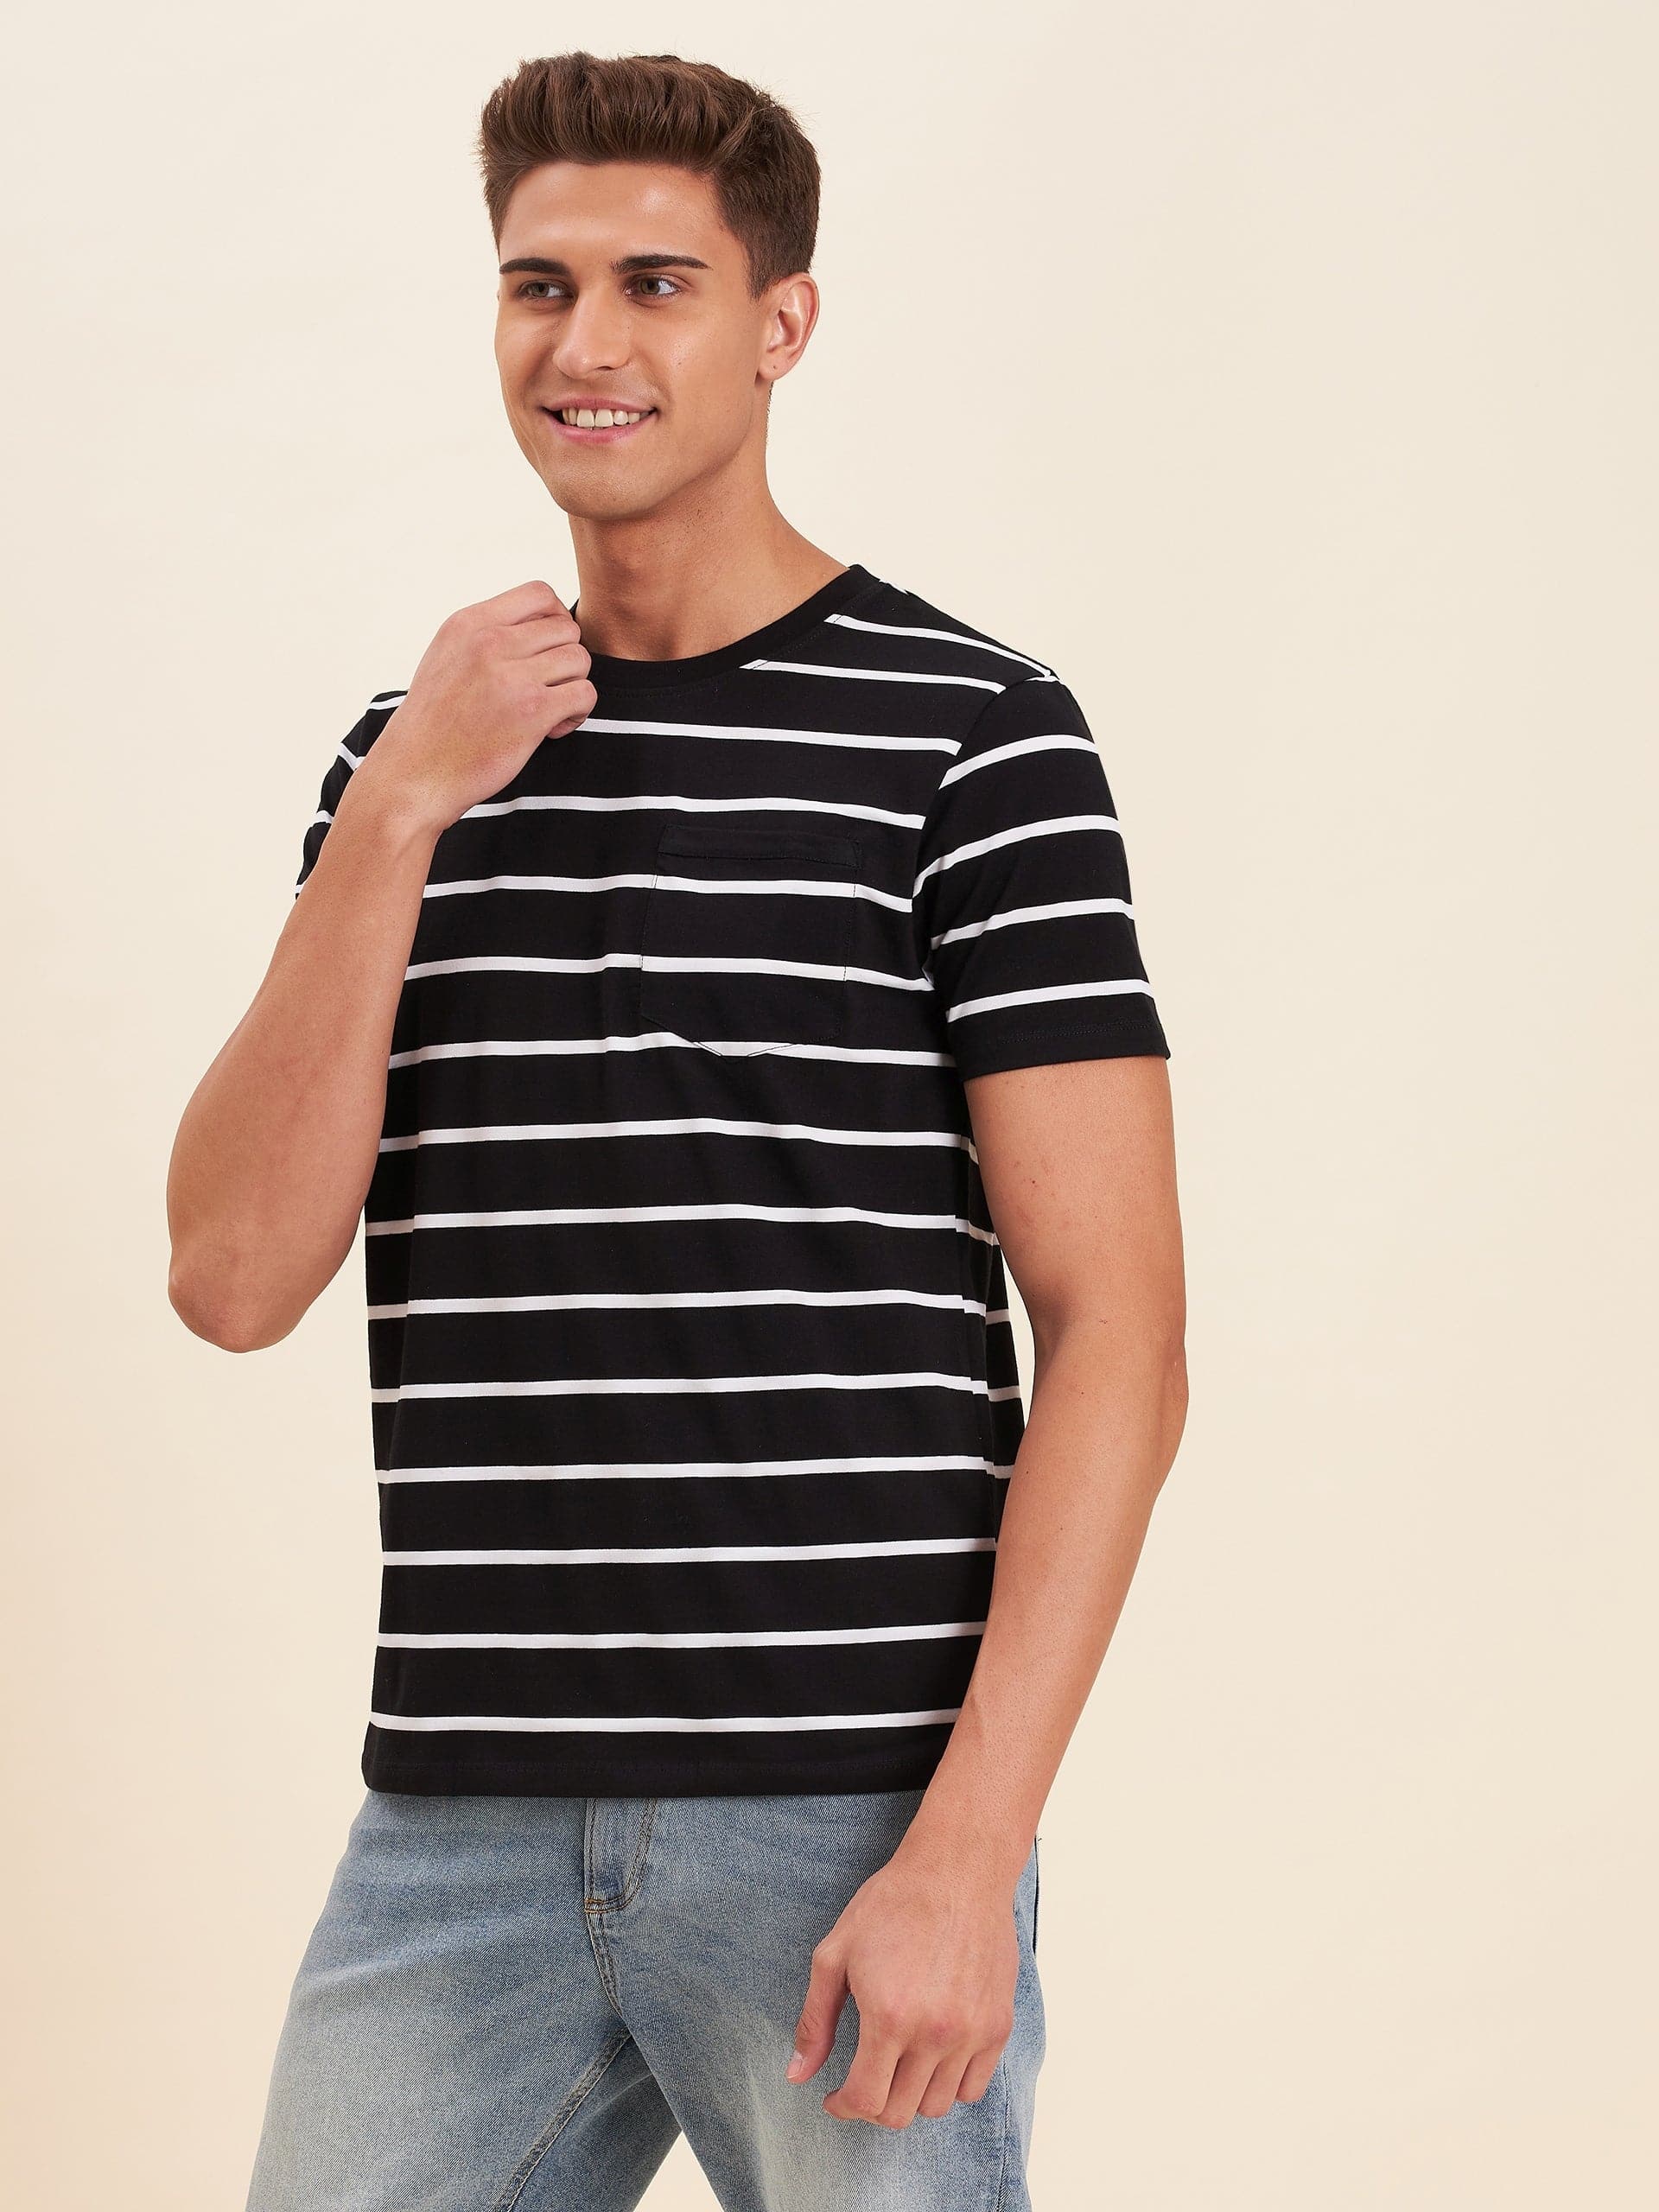 Men's Black & White Stripes Pocket Cotton T-Shirt - LYUSH-MASCLN